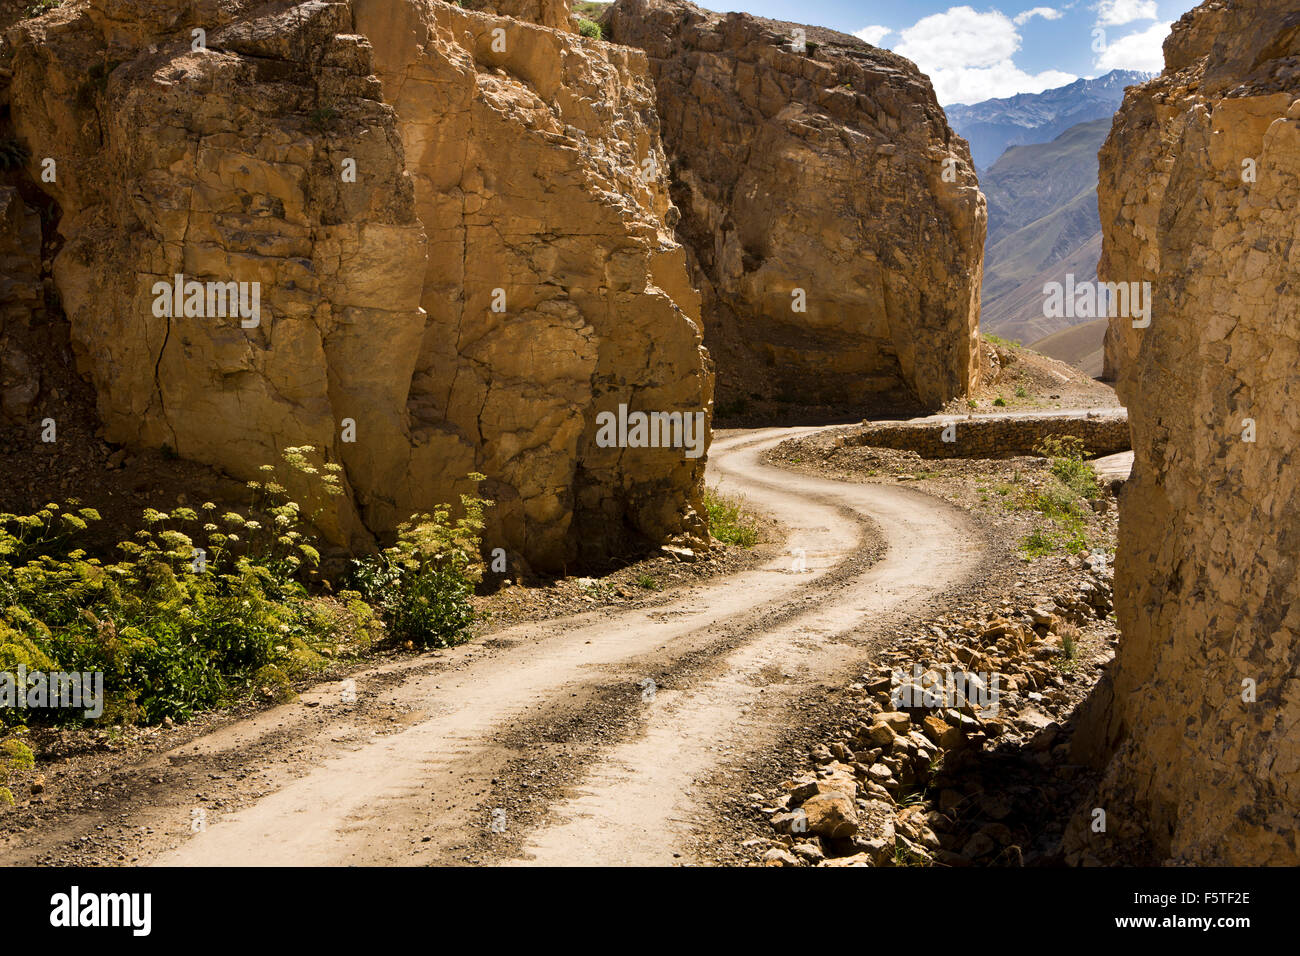 India, Himachal Pradesh, Spiti, Kibber, narrow winding road through mountain gorge Stock Photo